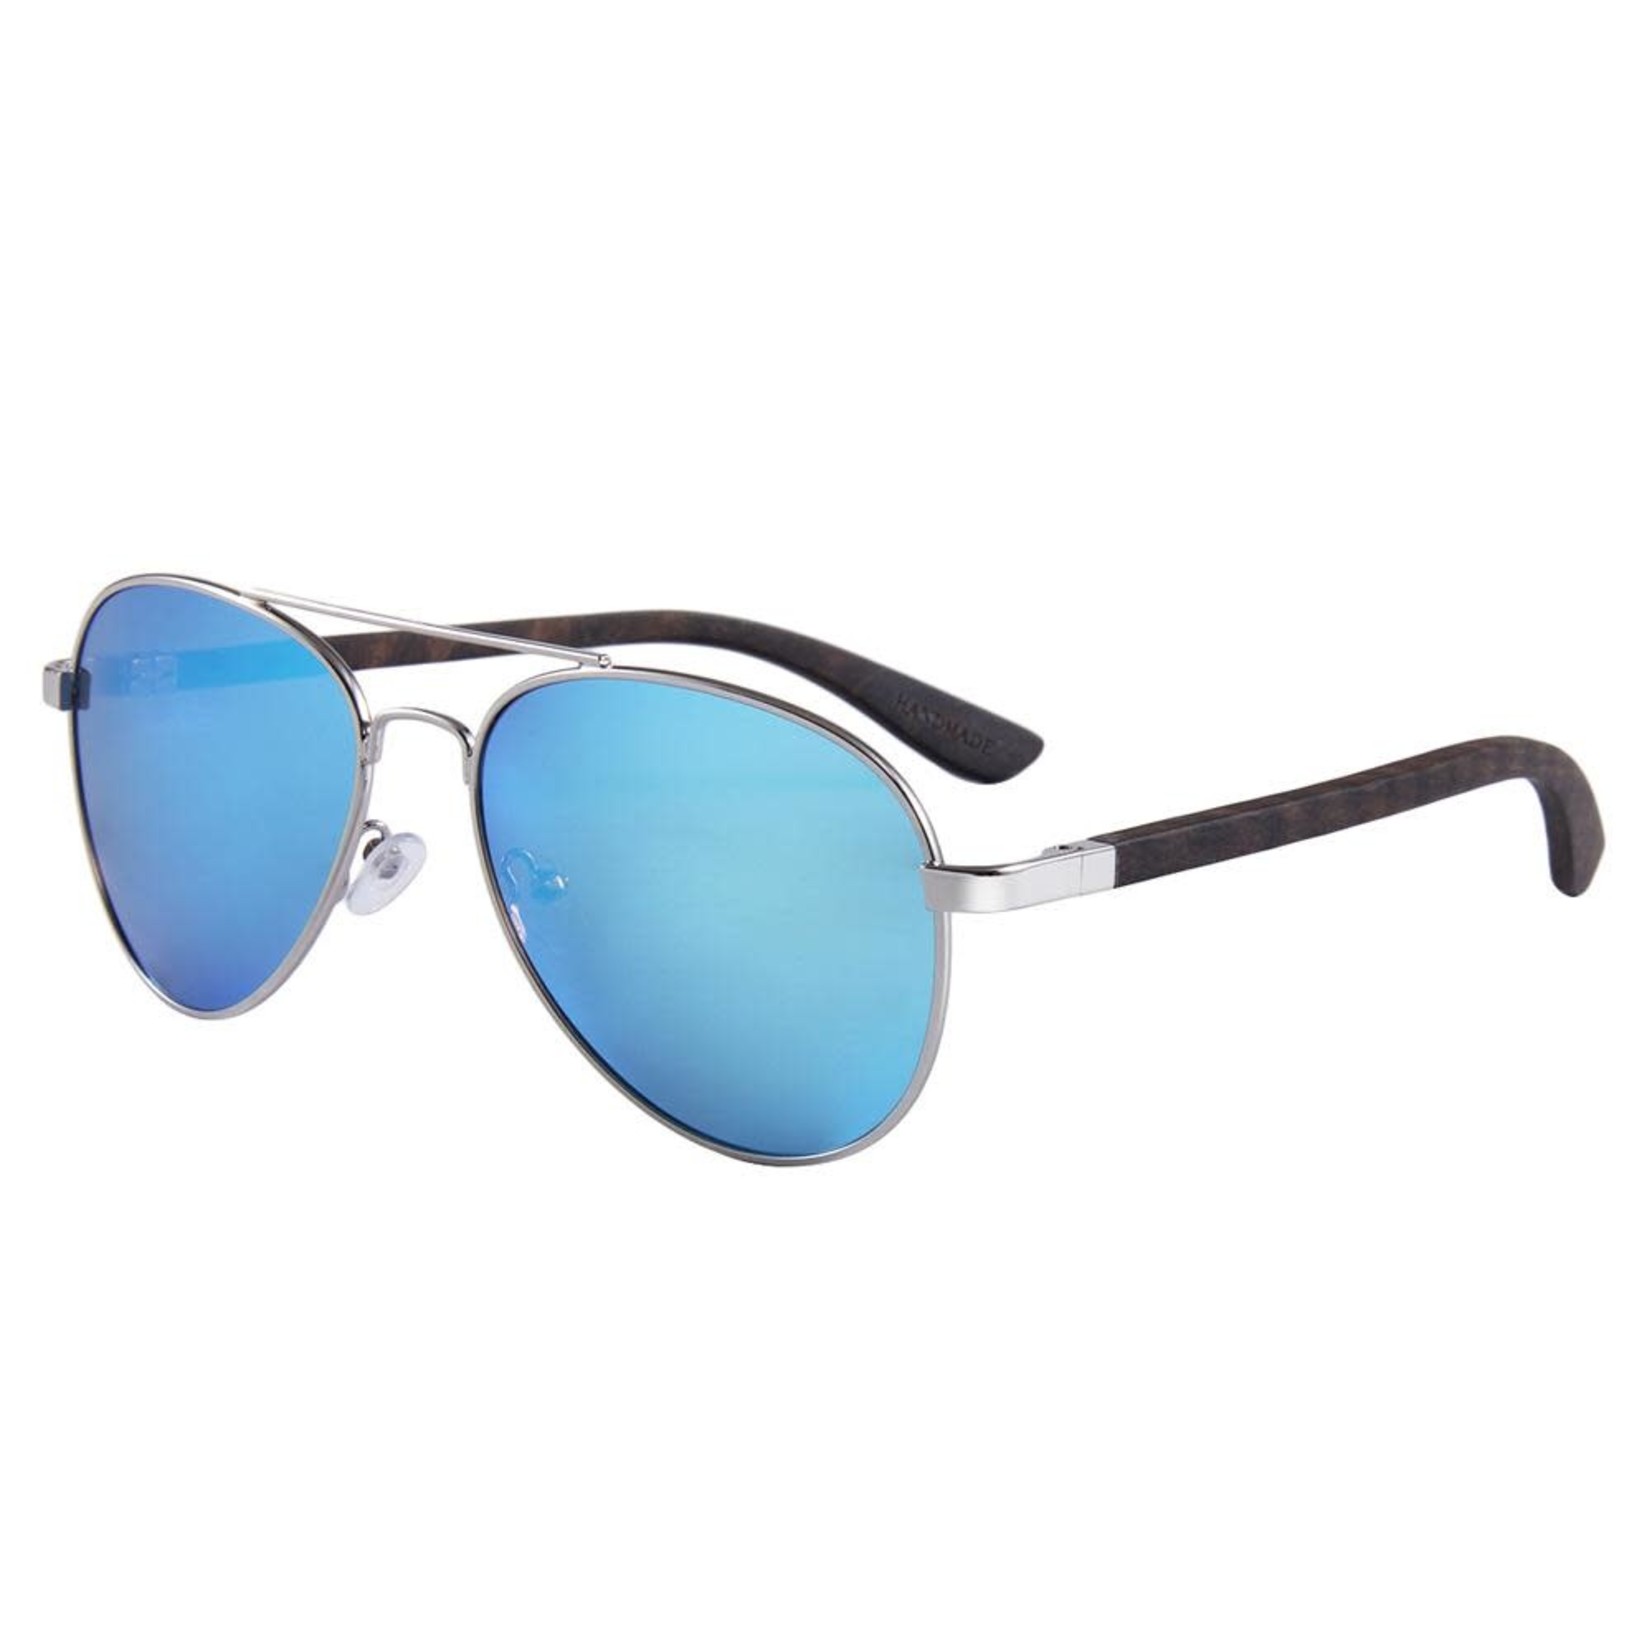 Men's Polarized Sunglasses Silver light blue